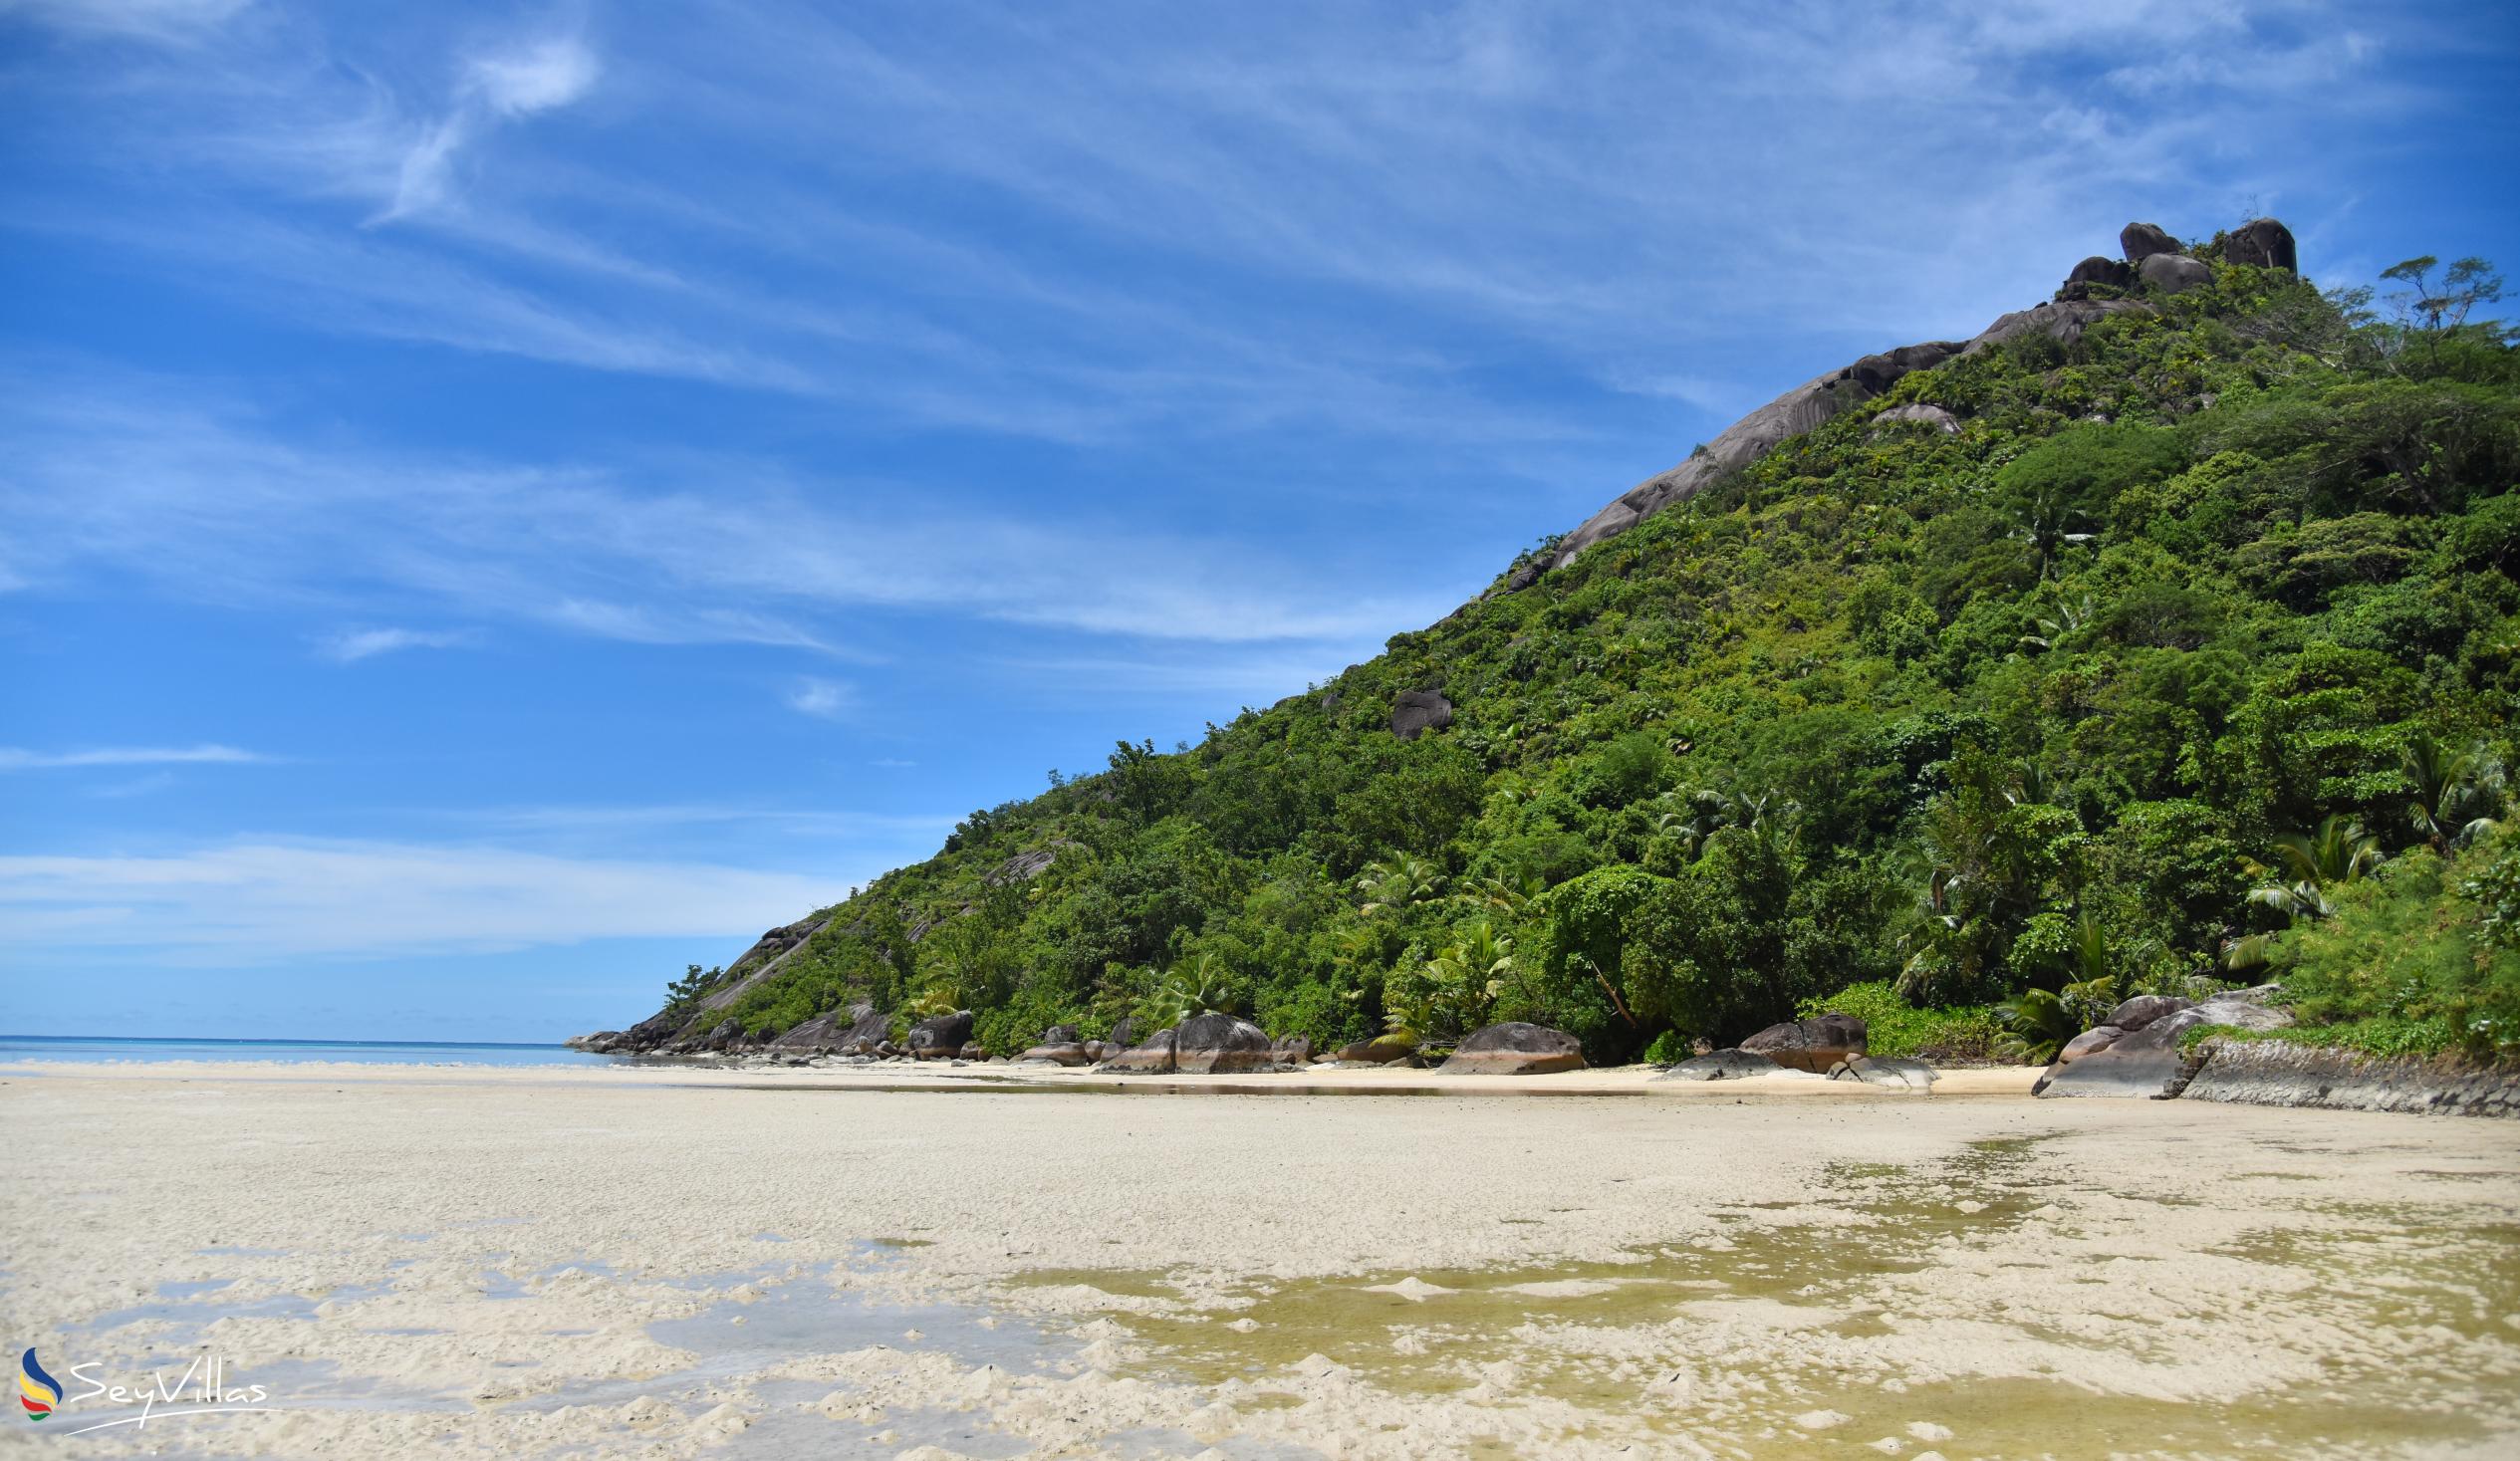 Foto 19: Baie Ternay - Mahé (Seychelles)